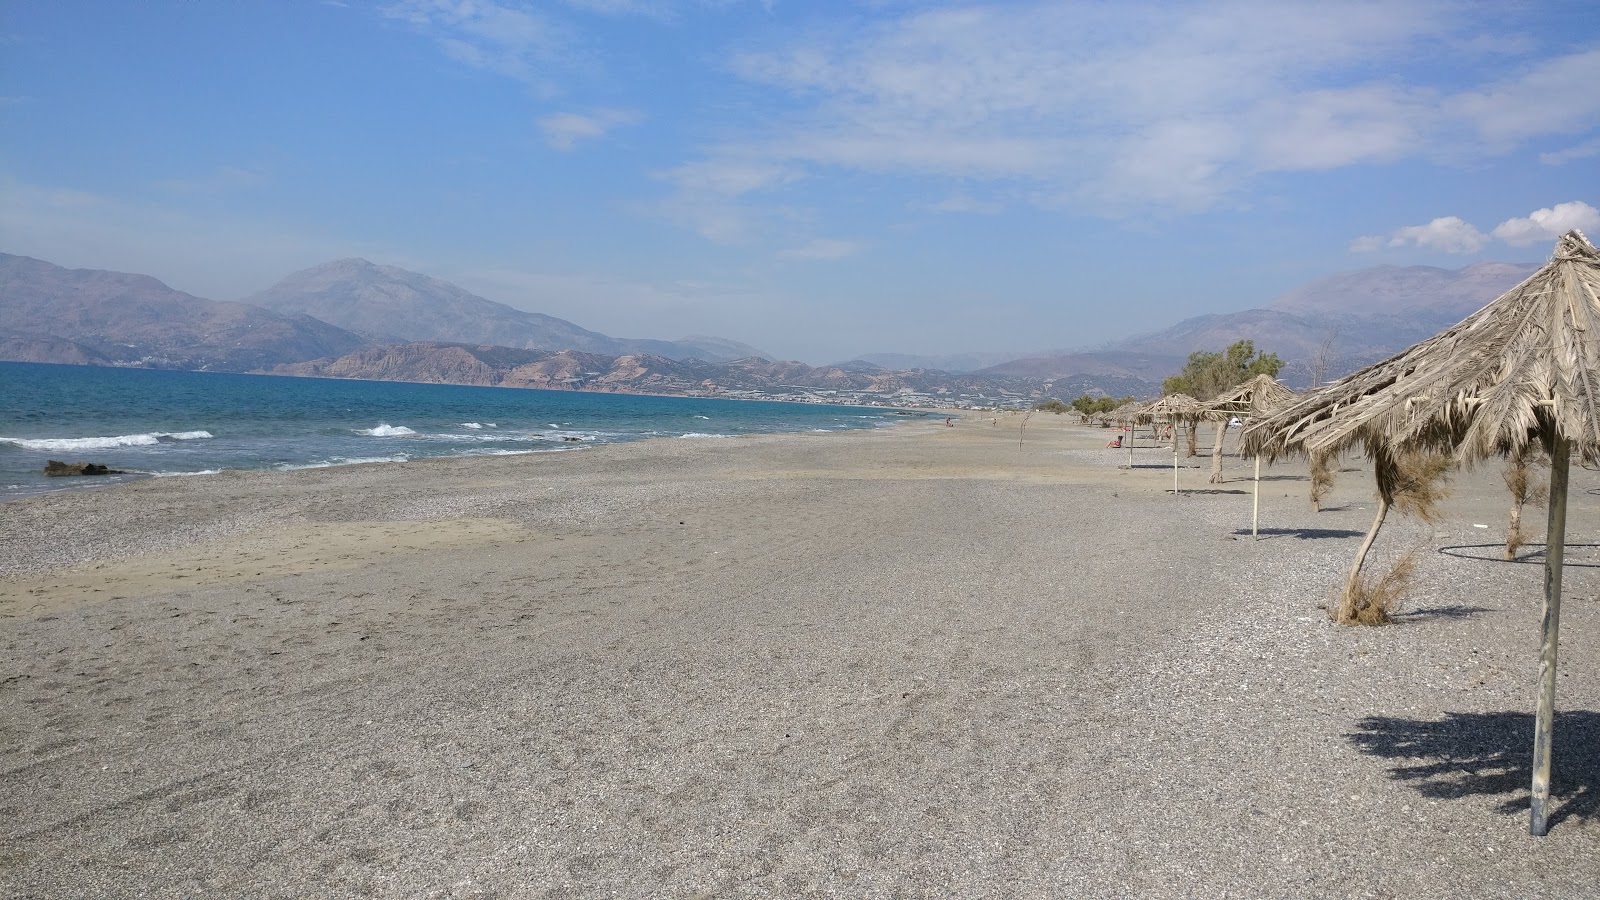 Photo of Afrathias beach - popular place among relax connoisseurs